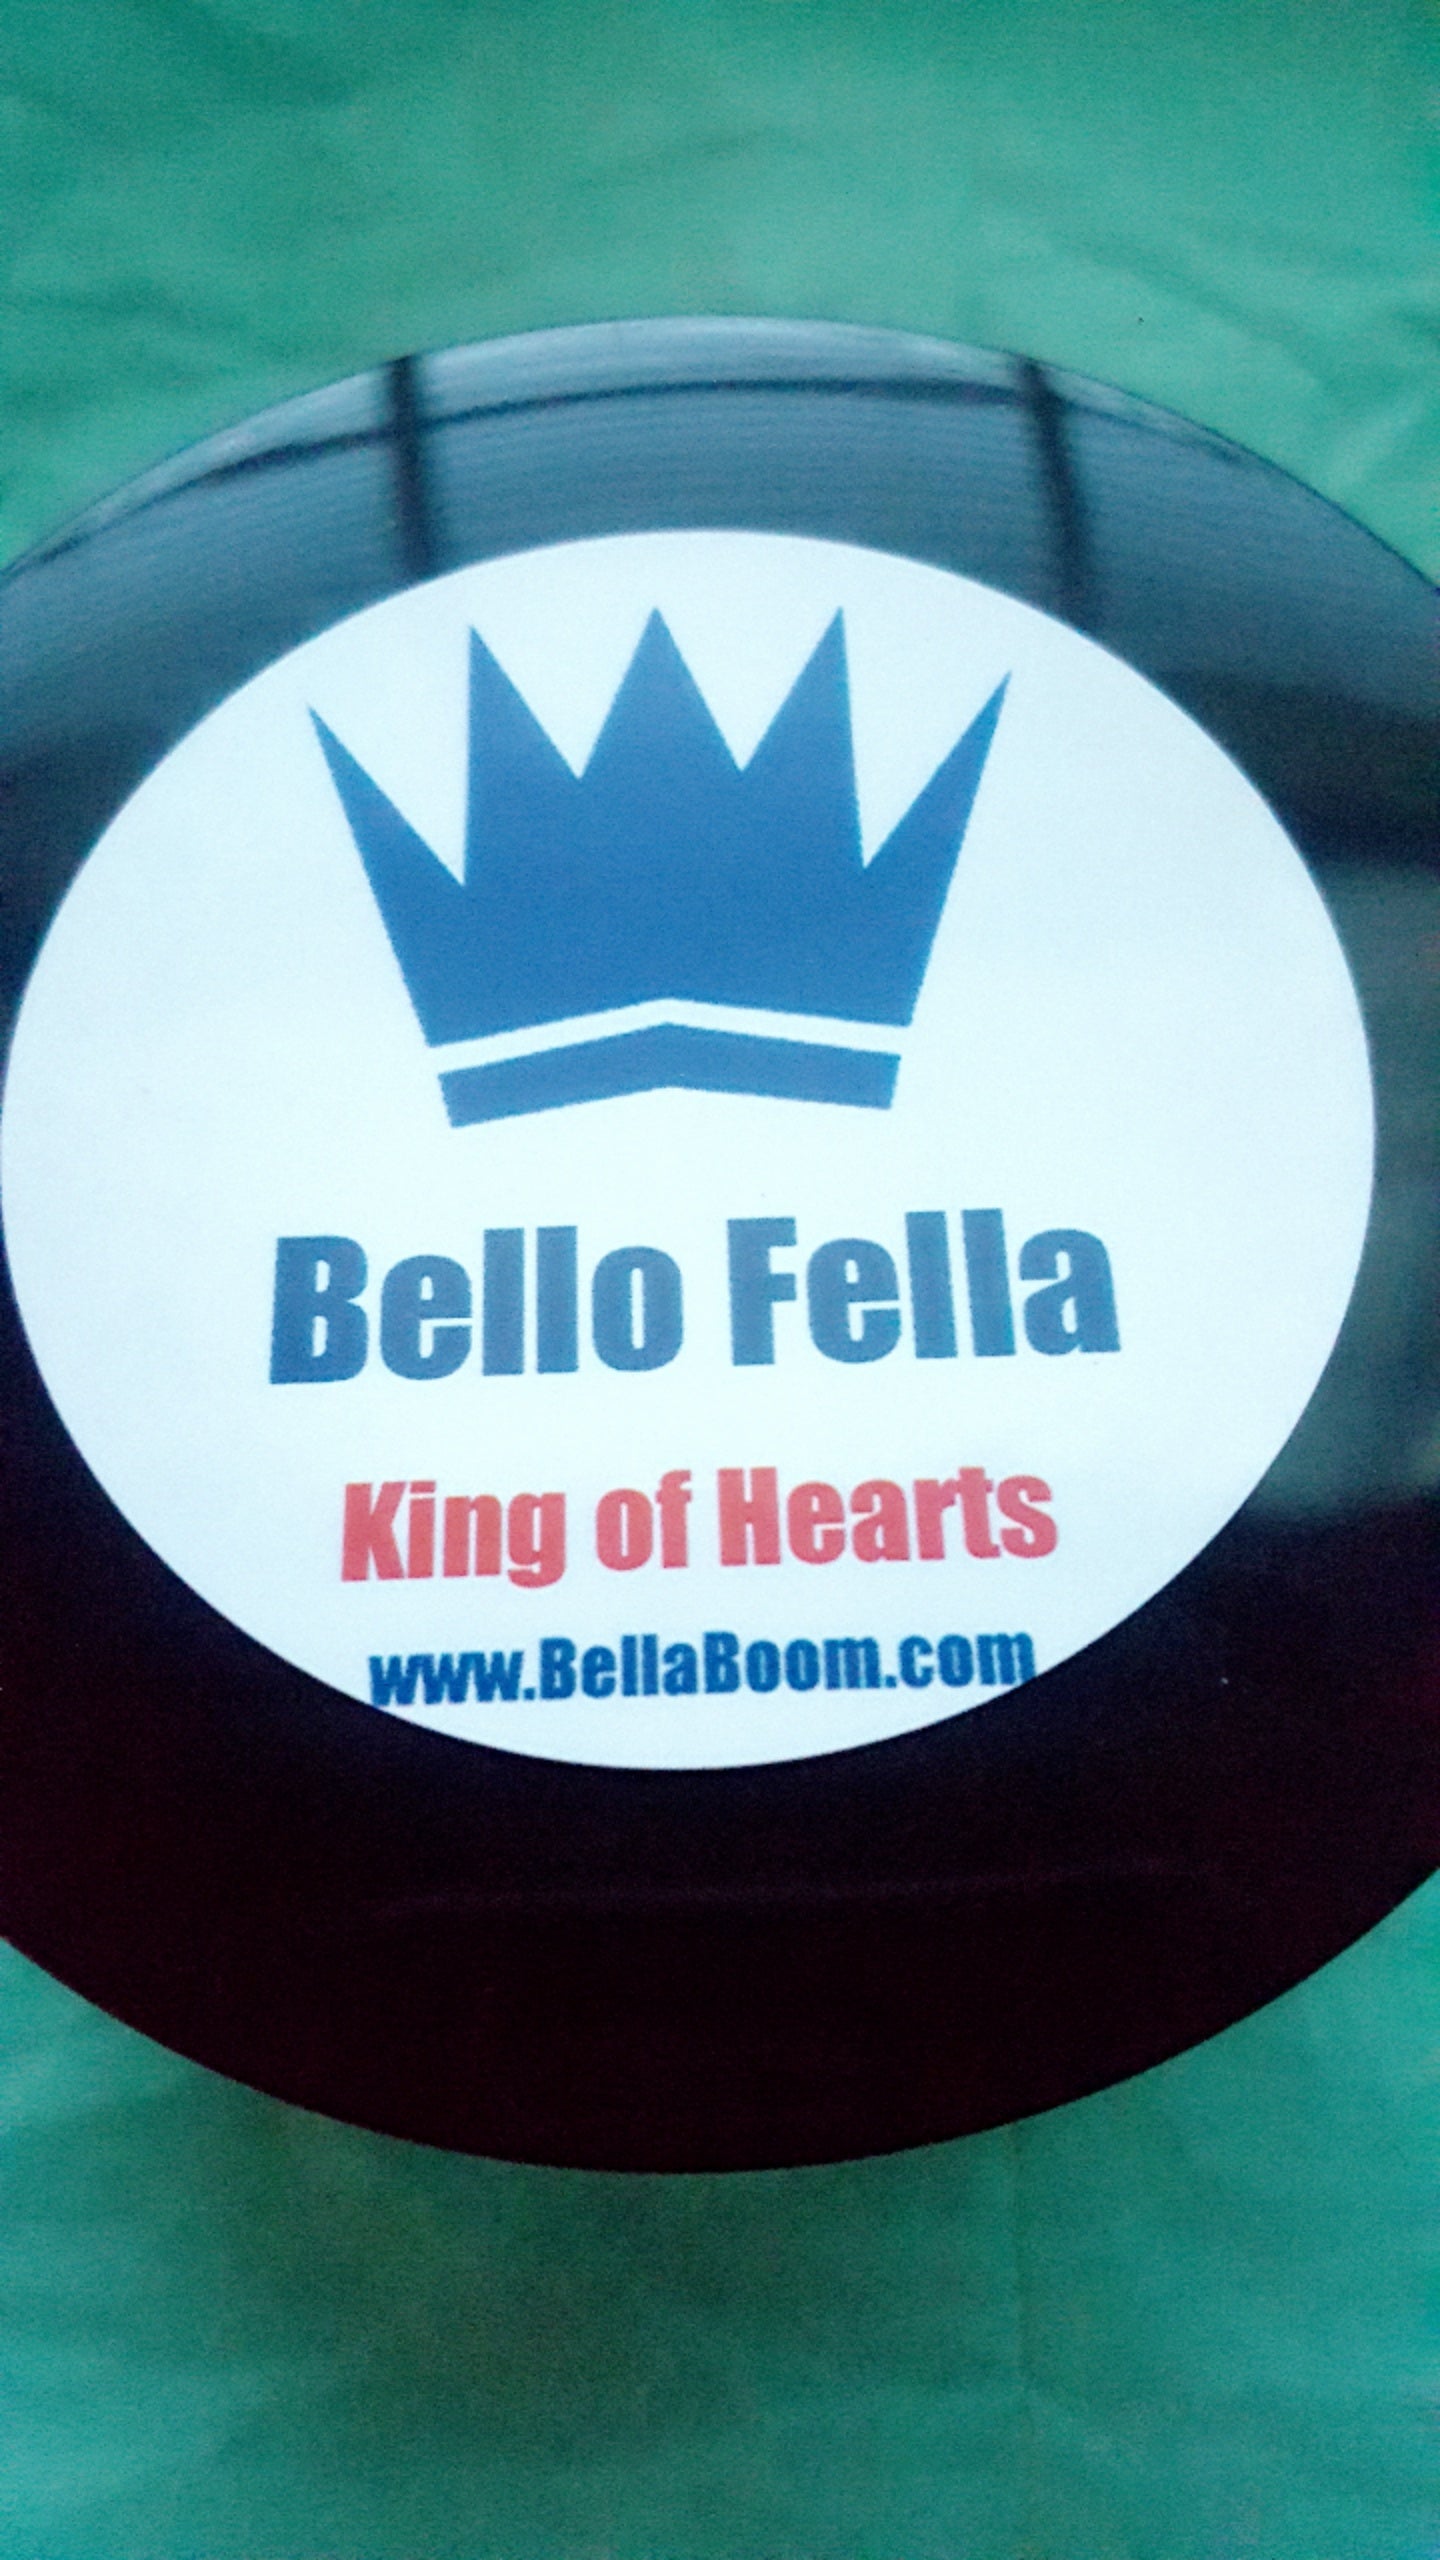 Bello Fella "King of Hearts"